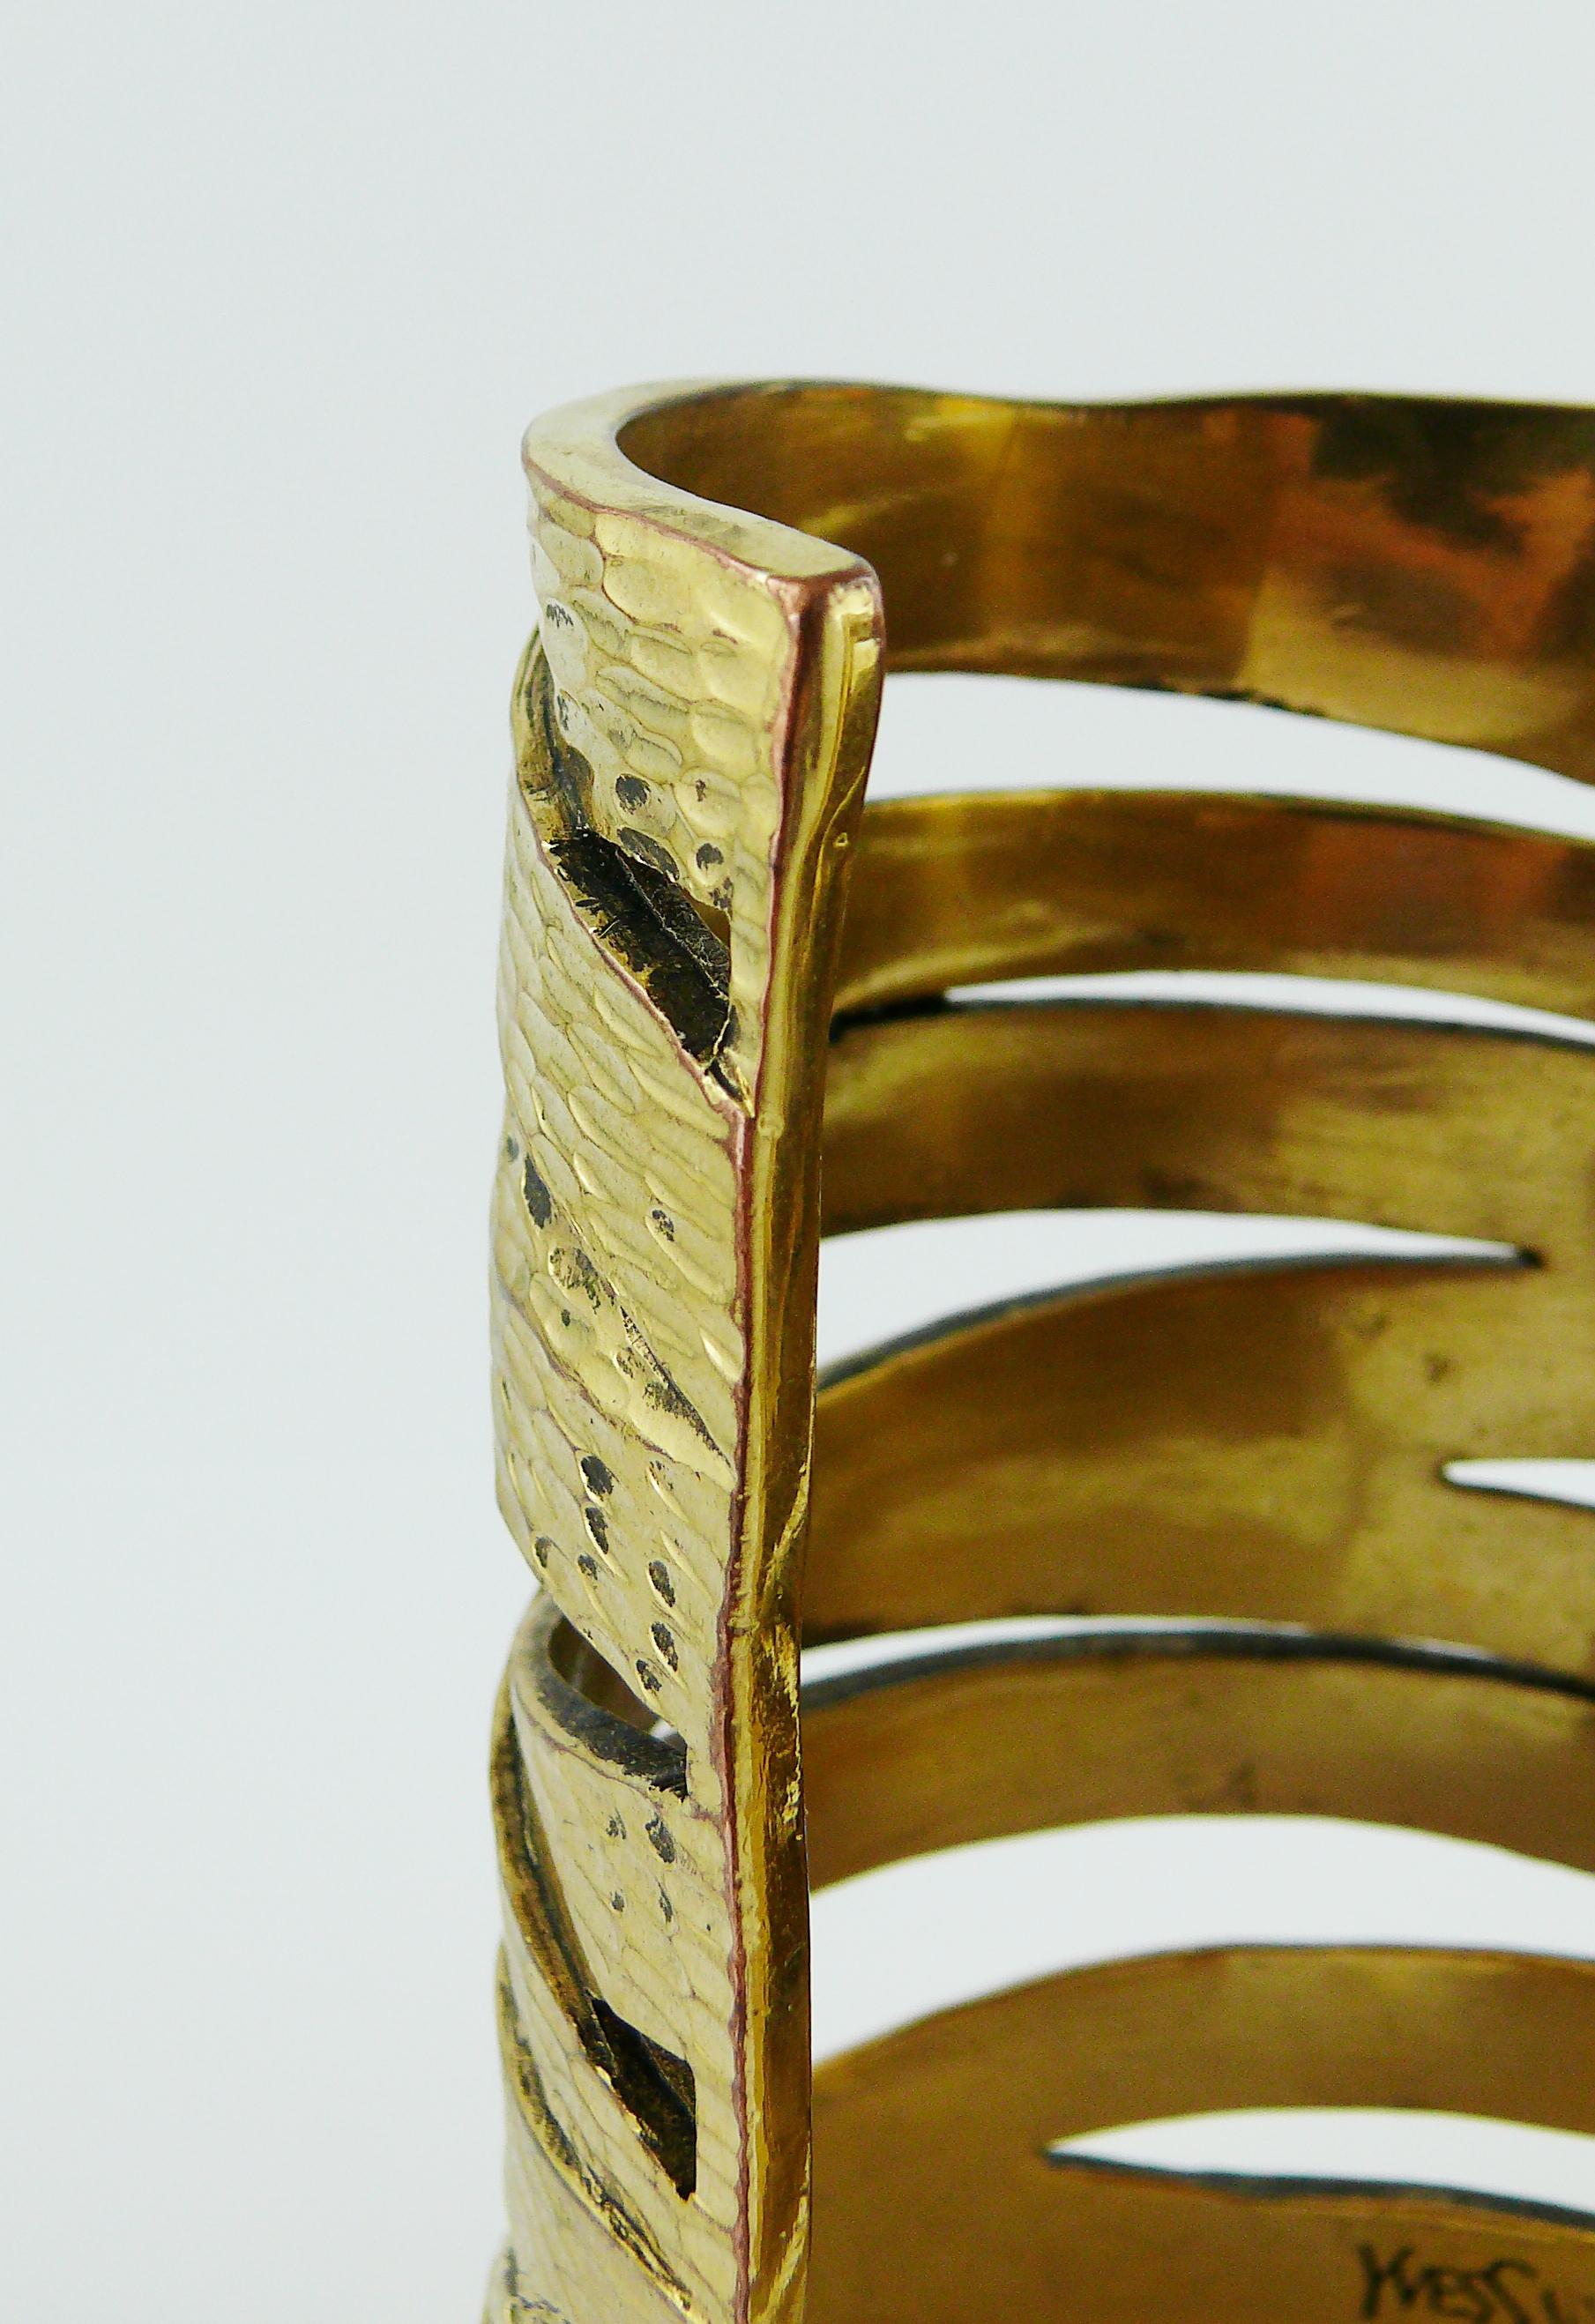 Yves Saint Laurent YSL Massive Gold Textured Cuff Bracelet 2